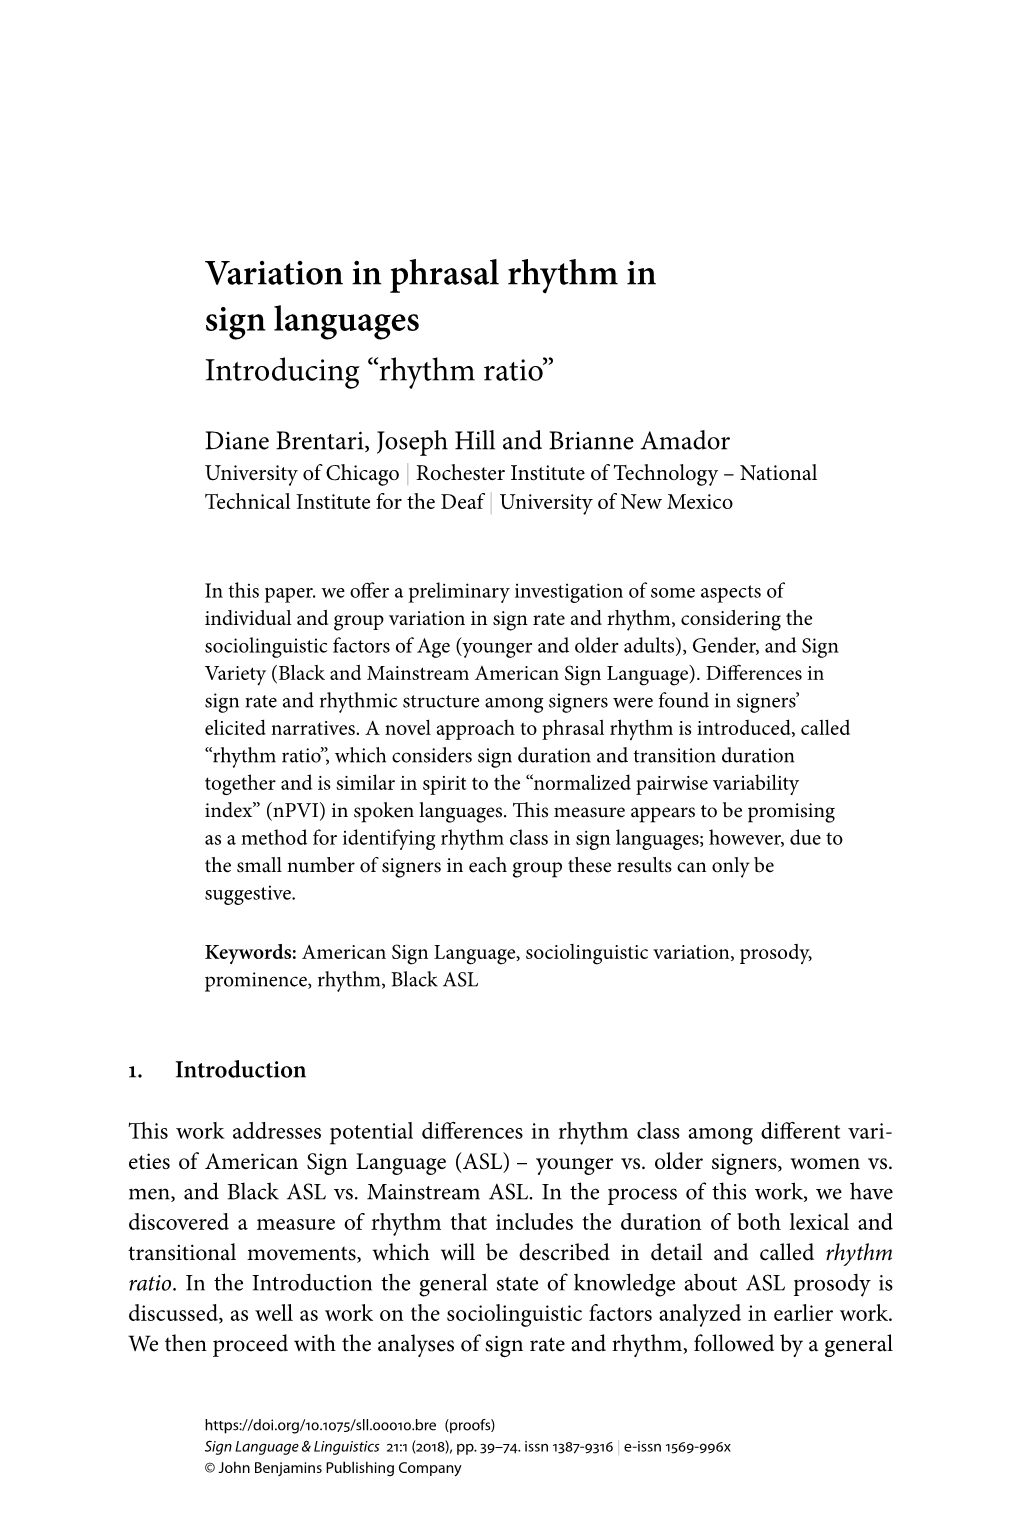 Brentari, Hill, & Amador: Variation in Phrasal Rhythm in Sign Languages